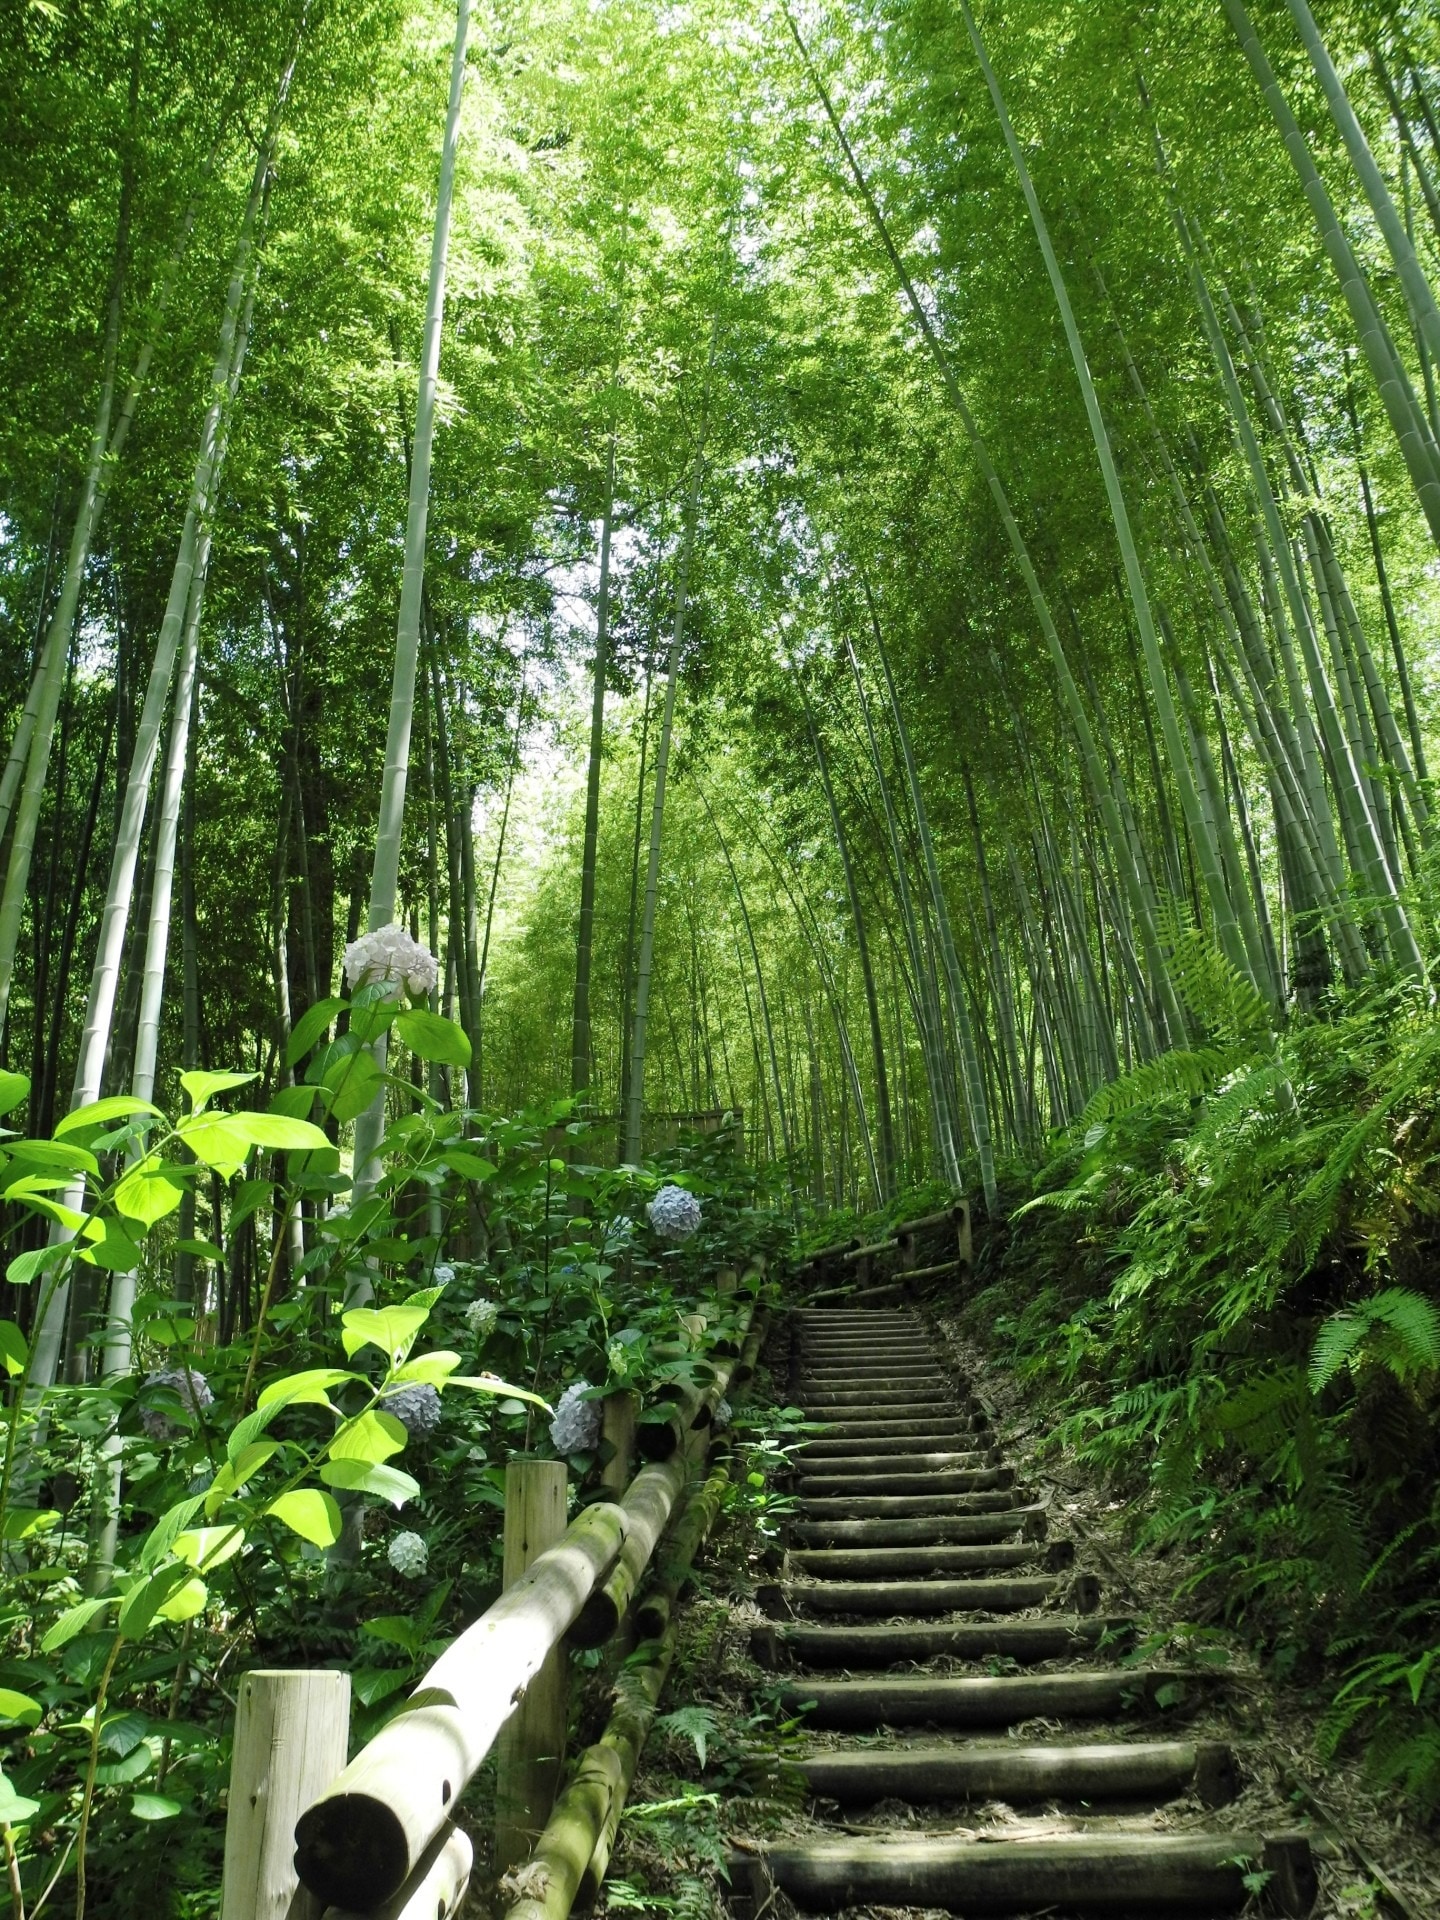 bottom shot of bamboo trees